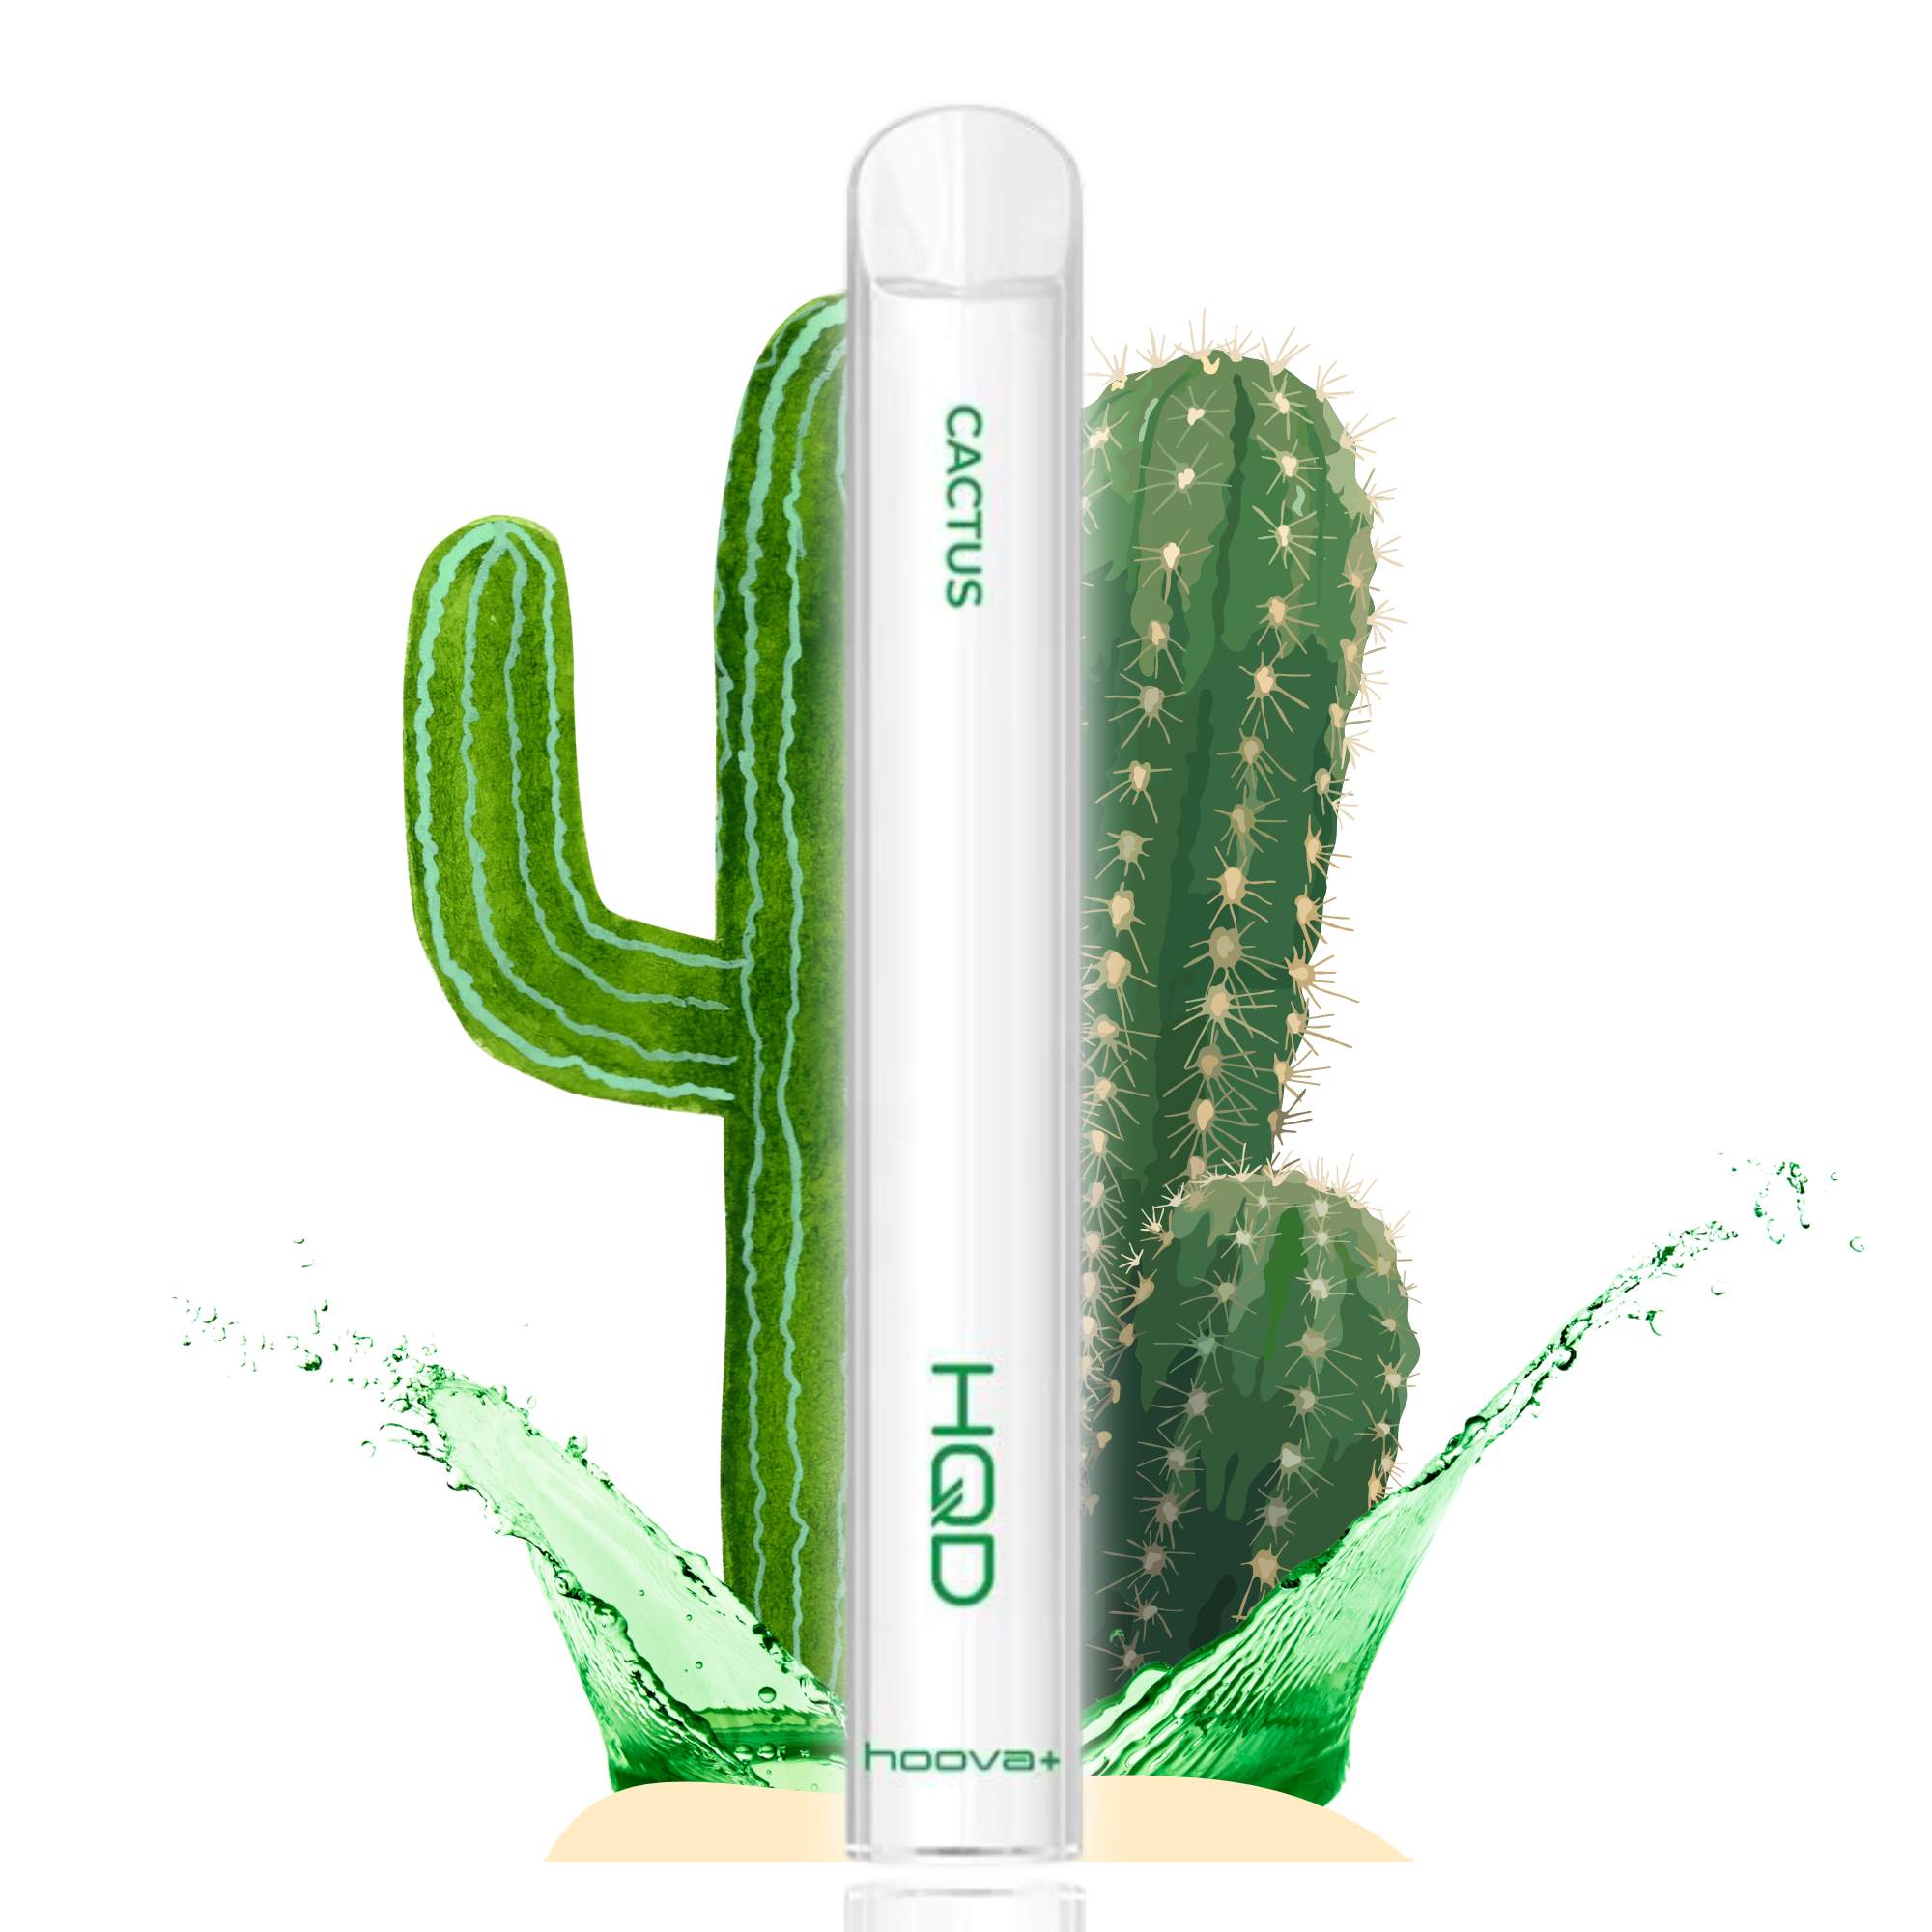 HQD Hoova+ Cactus 18mg/ml